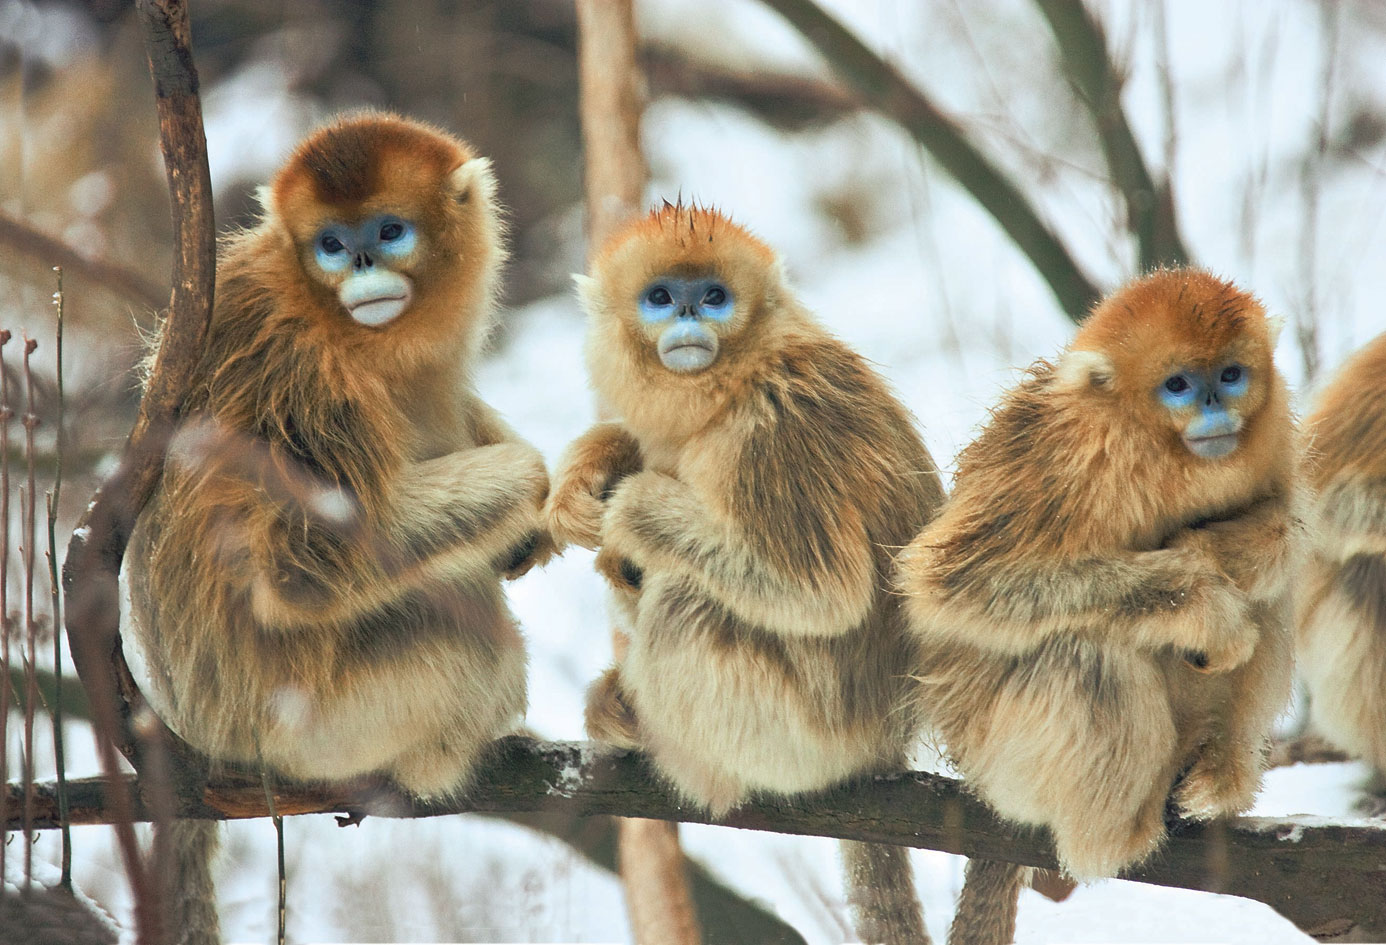 373776 descargar imagen mono dorado de nariz chata, animales, monos: fondos de pantalla y protectores de pantalla gratis